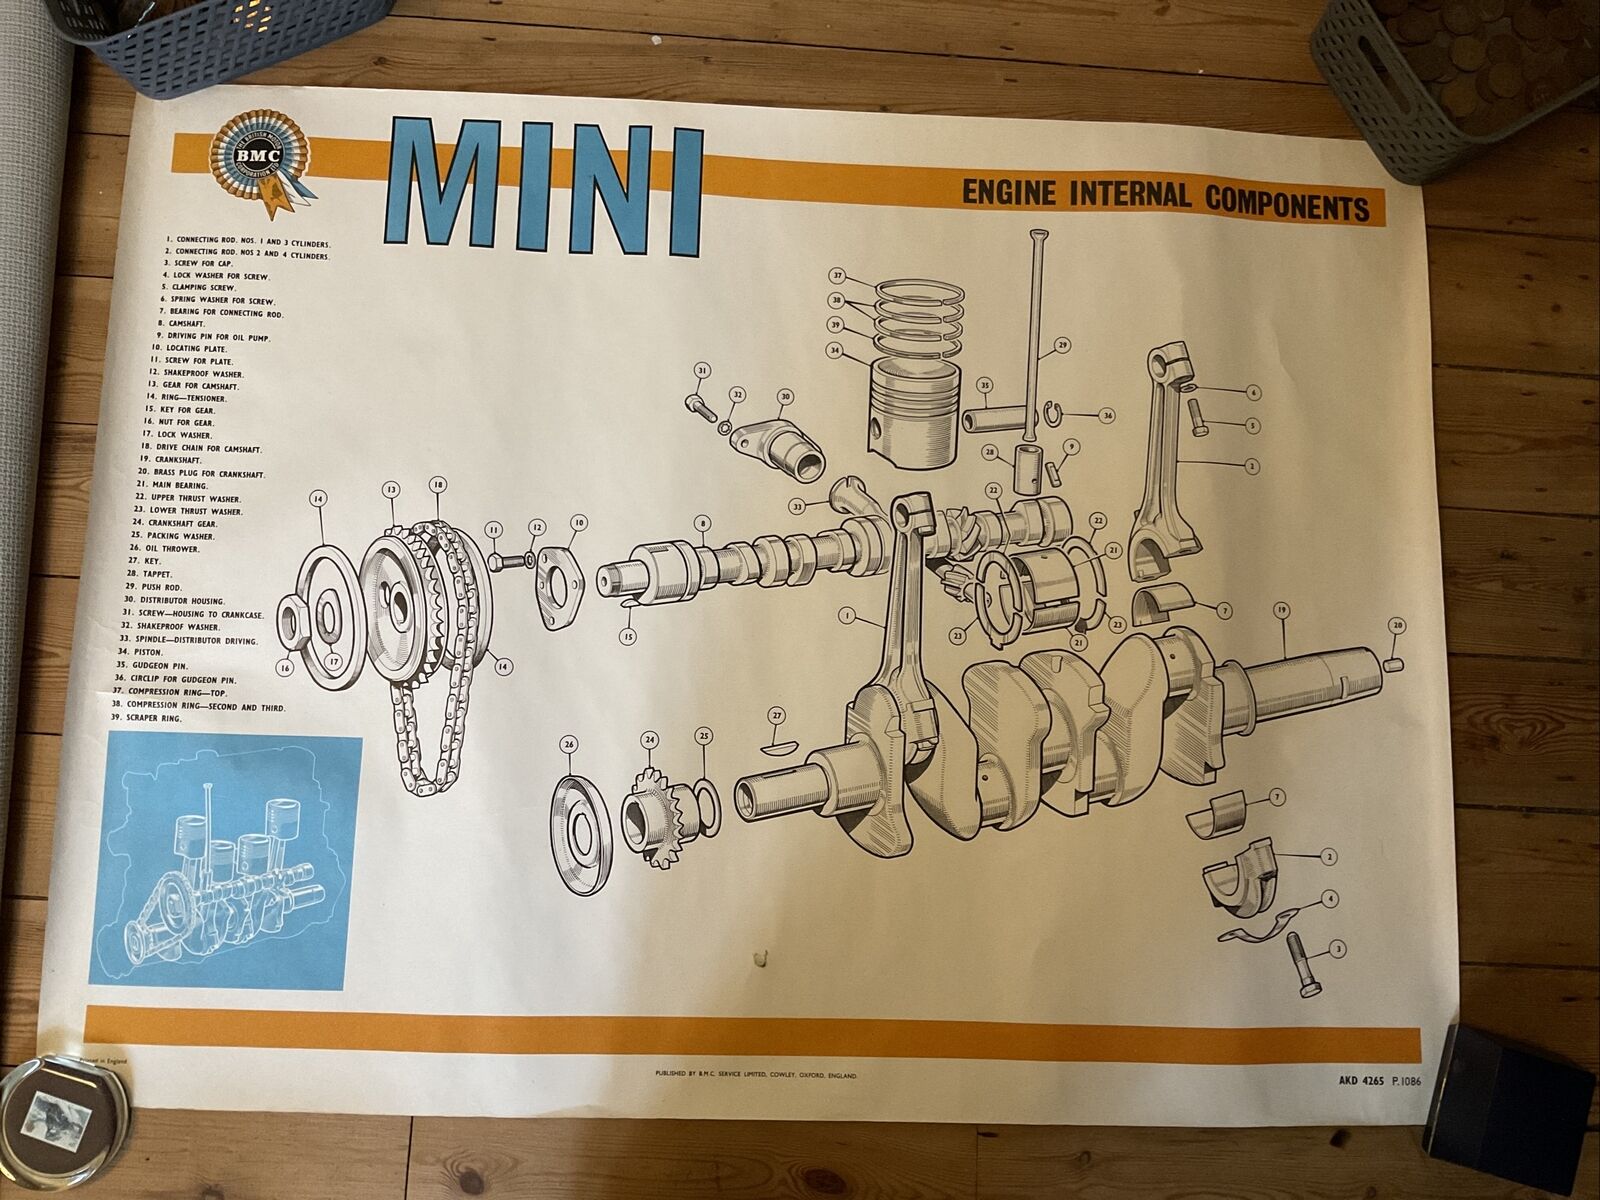 Original Vintage Mini BMC Engine Internal Components Exploded-View Poster